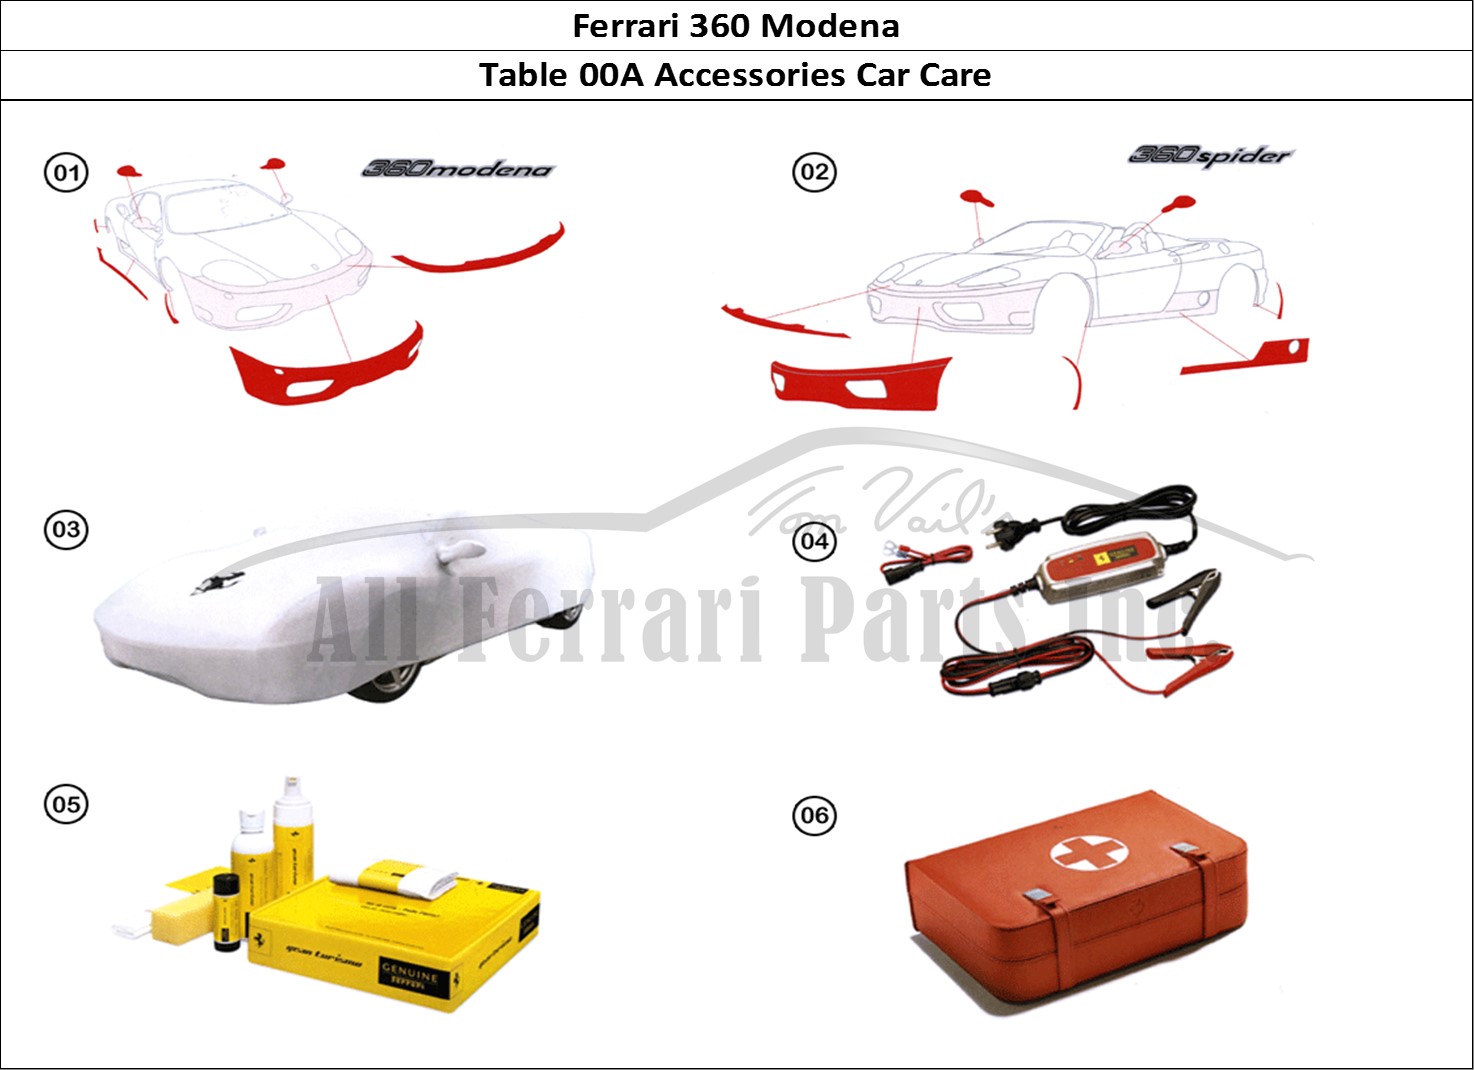 Ferrari Parts Ferrari 360 Modena Page 00a Accessories - Car Care